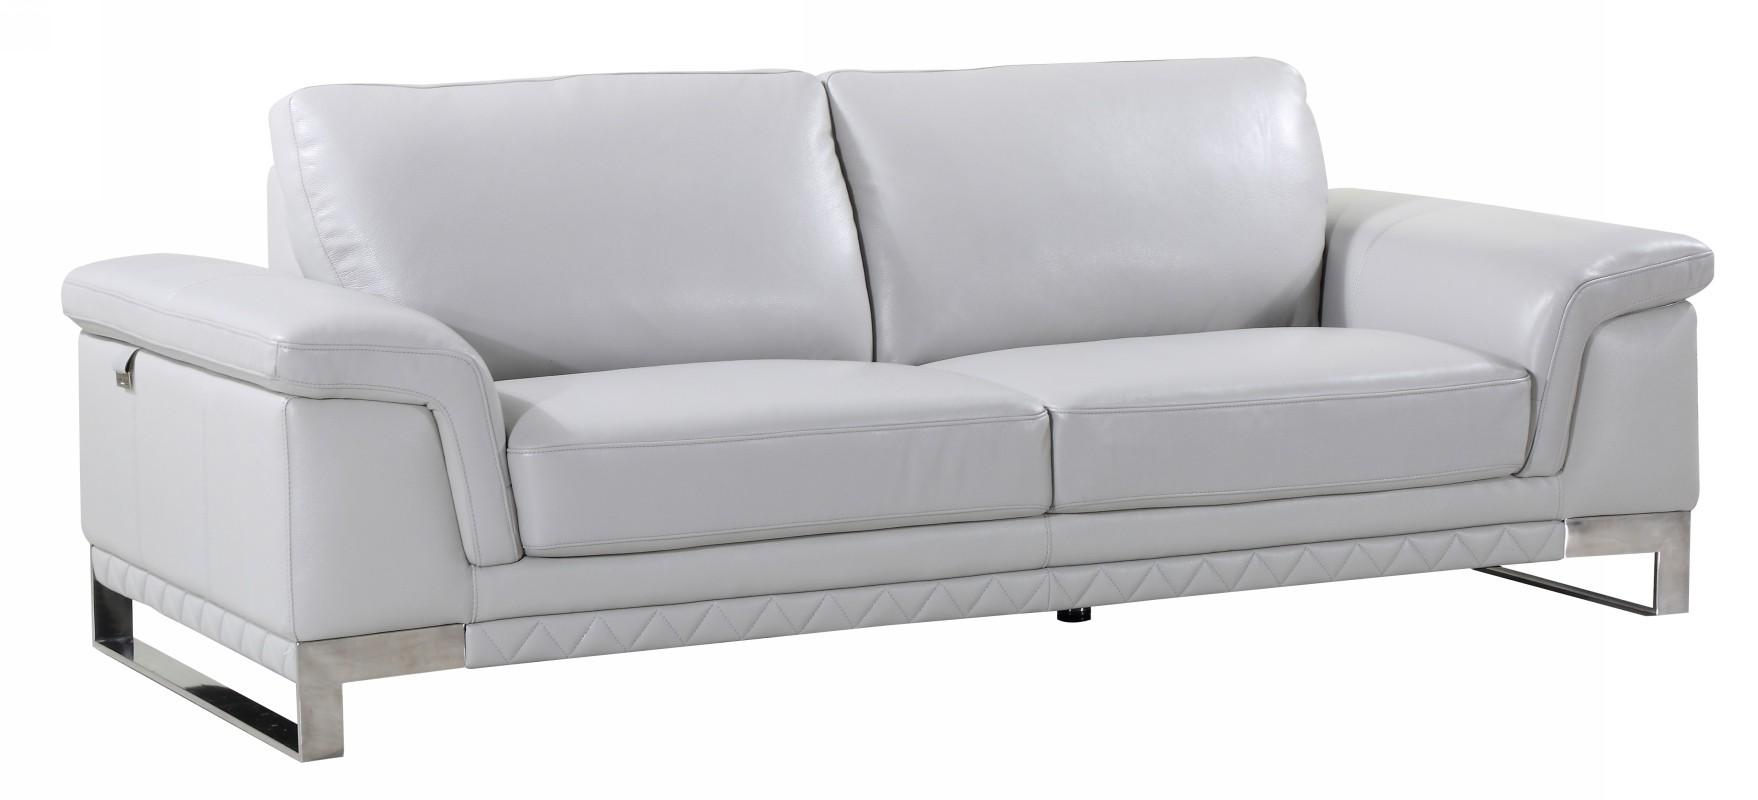 Contemporary Sofa 411 411-LIGHT_GRAY-S in Light Gray Genuine Leather